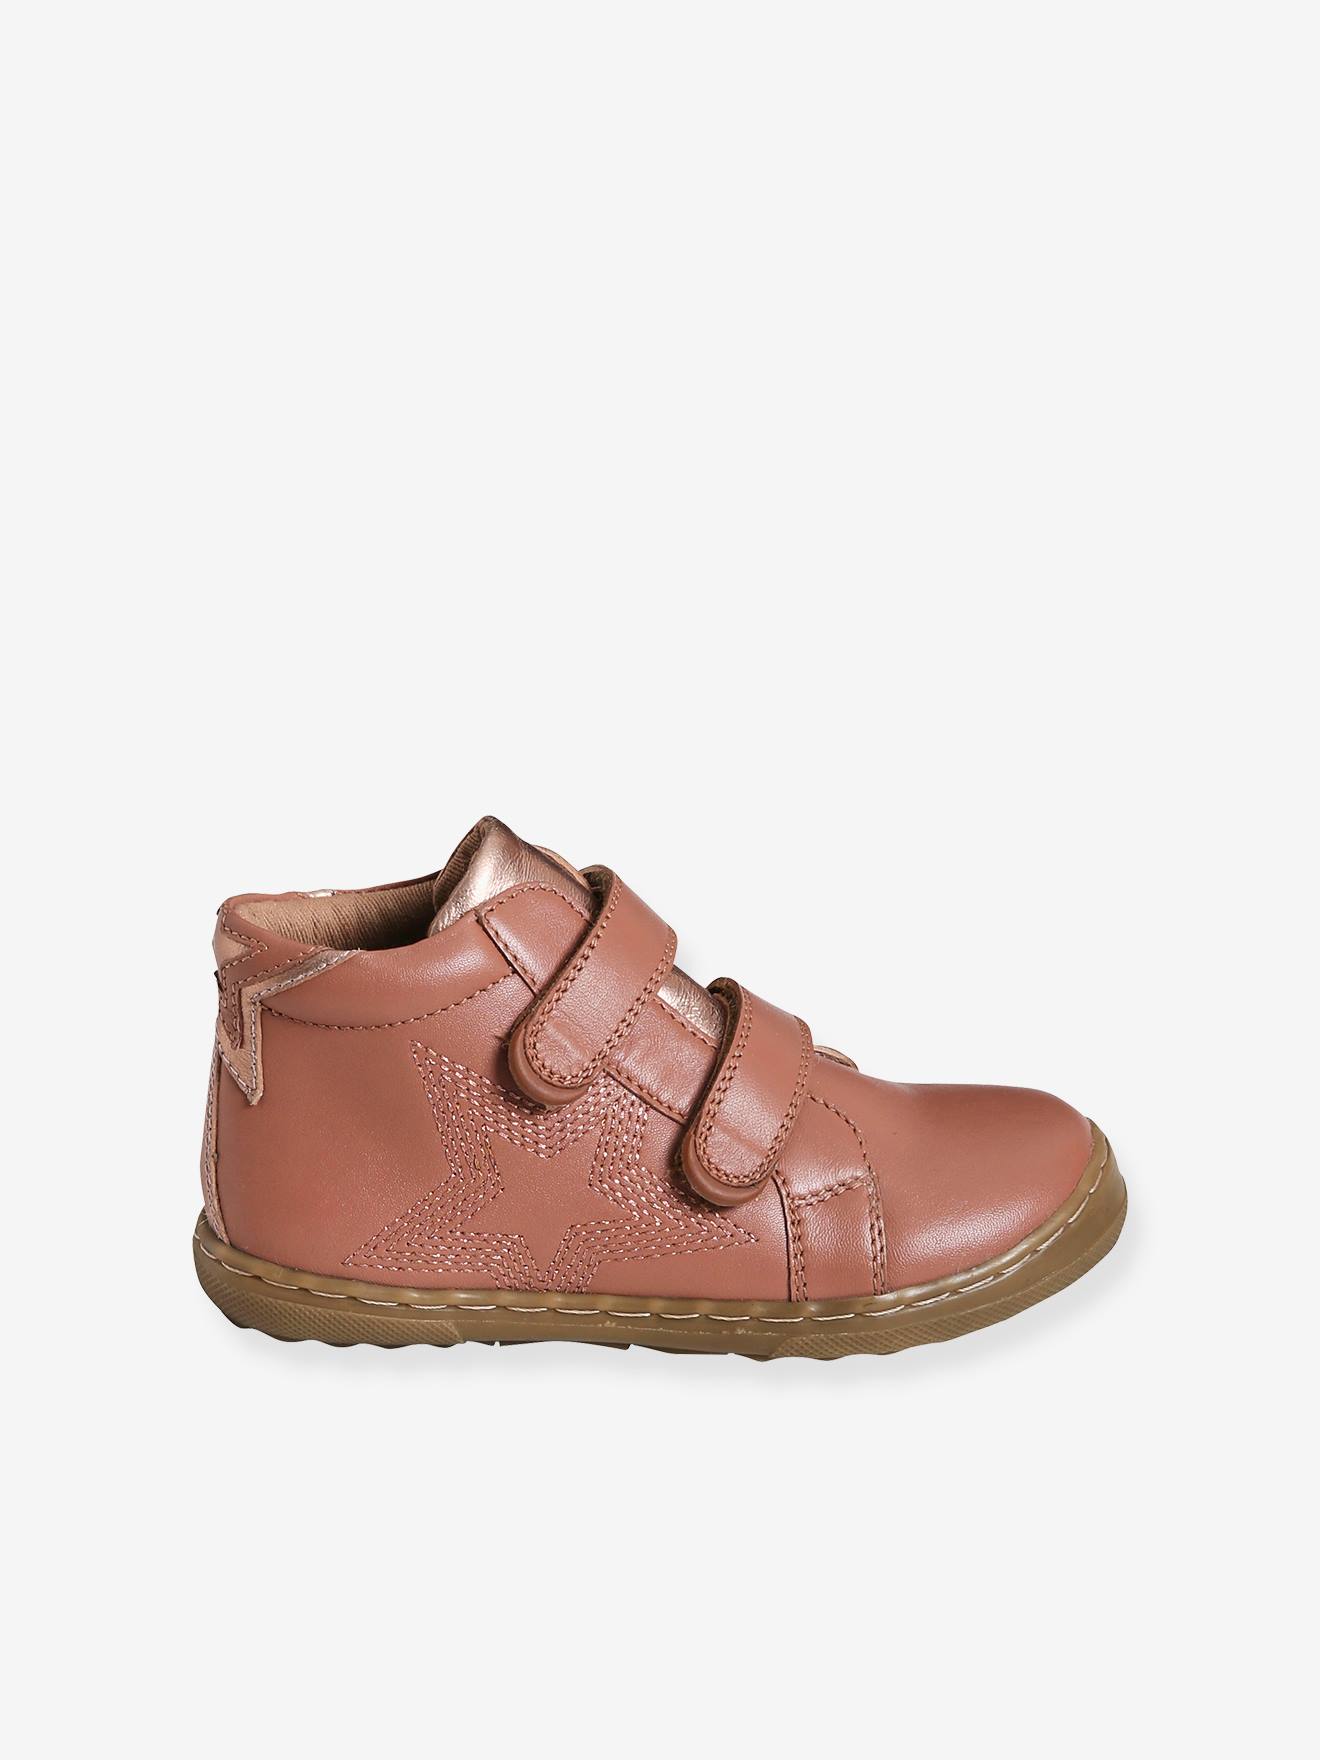 Petasil Brown Leather Ankle Boot Schoenen Jongensschoenen Laarzen 